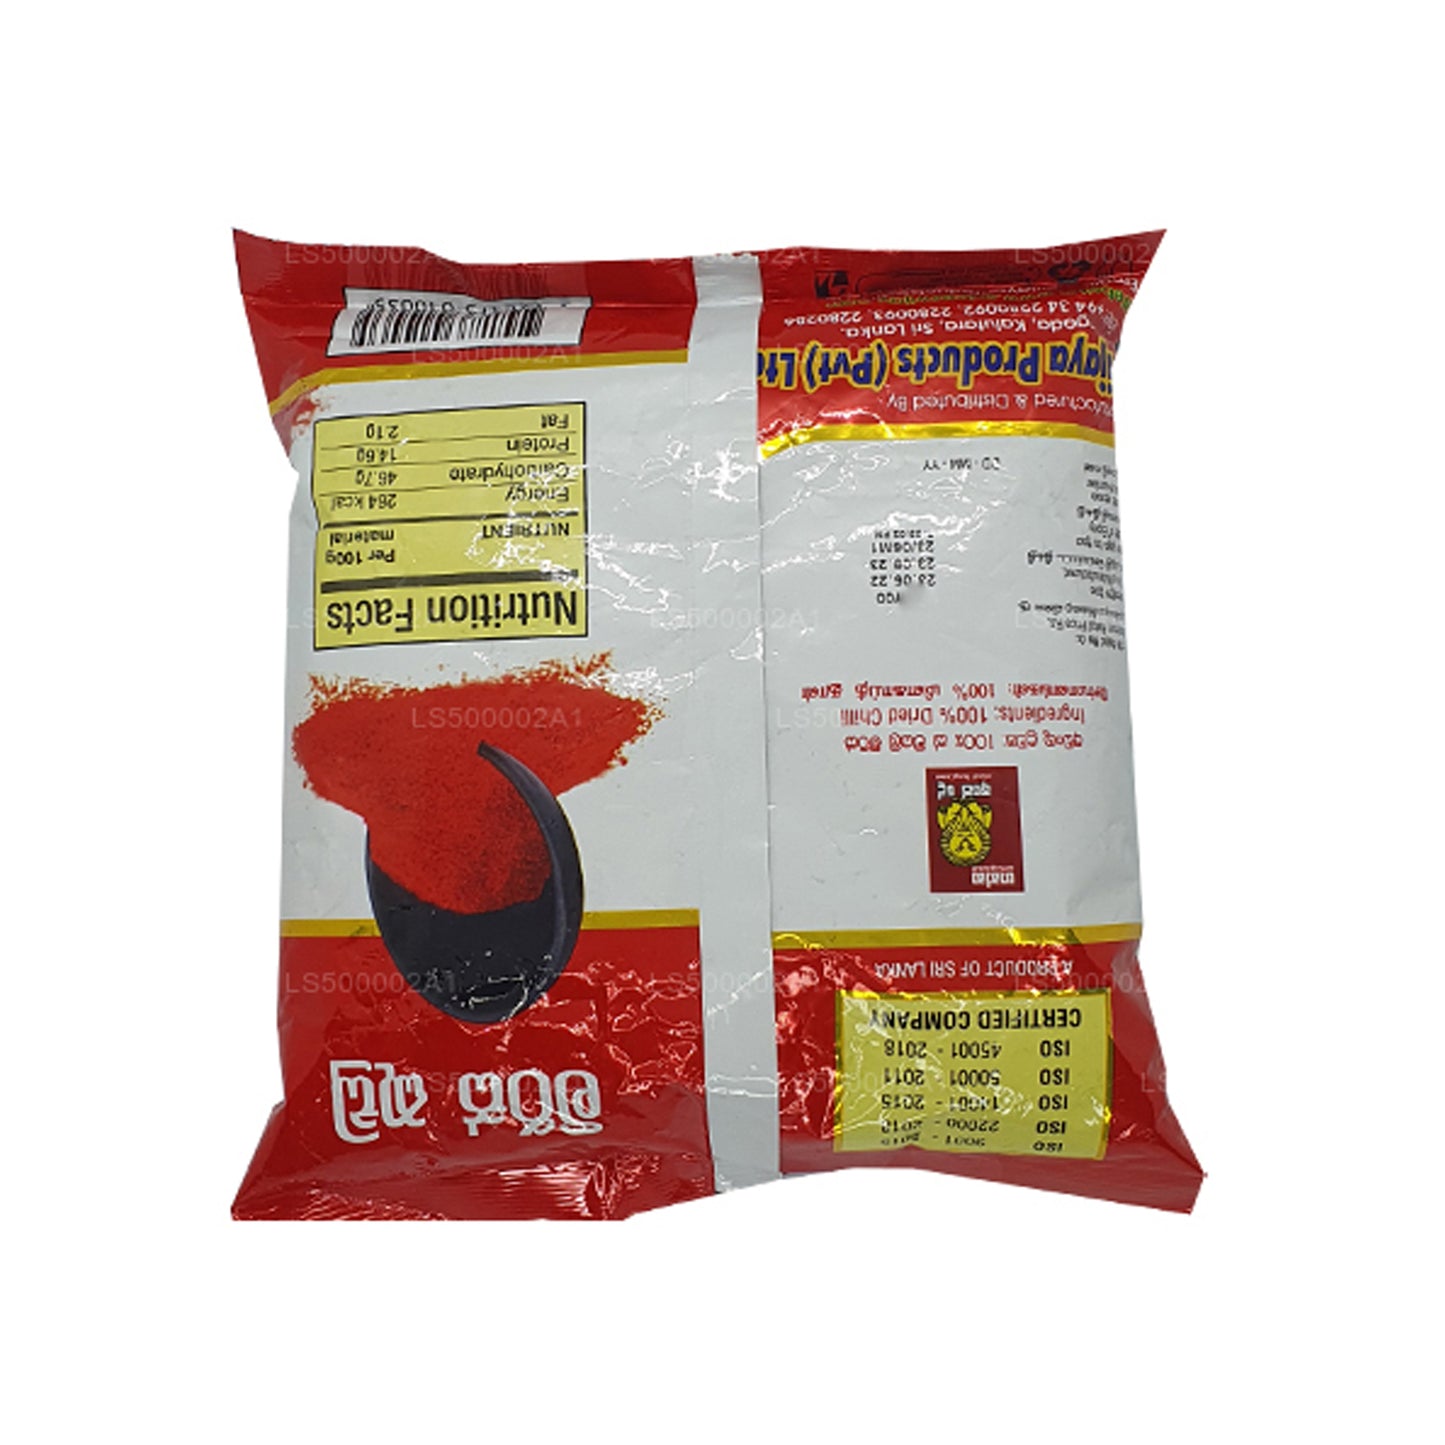 Polvo de chile Wijaya (500 g)